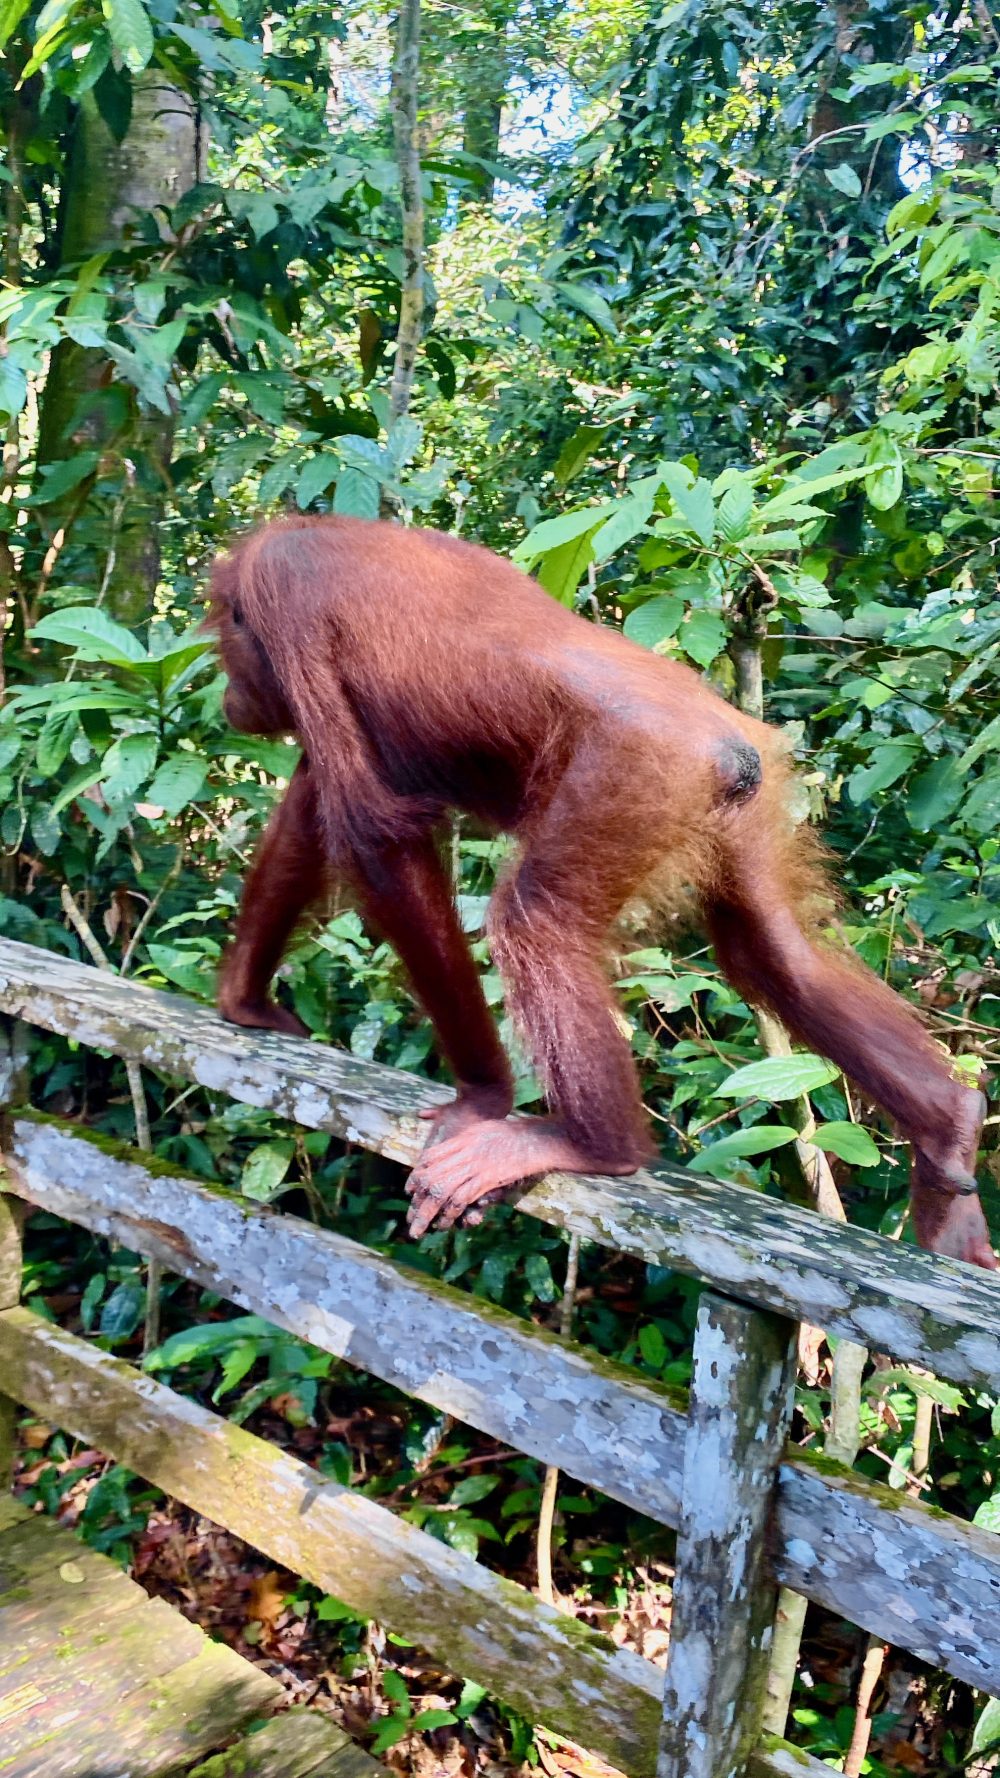 Up close and personal with an adult orangutan in Sepilok